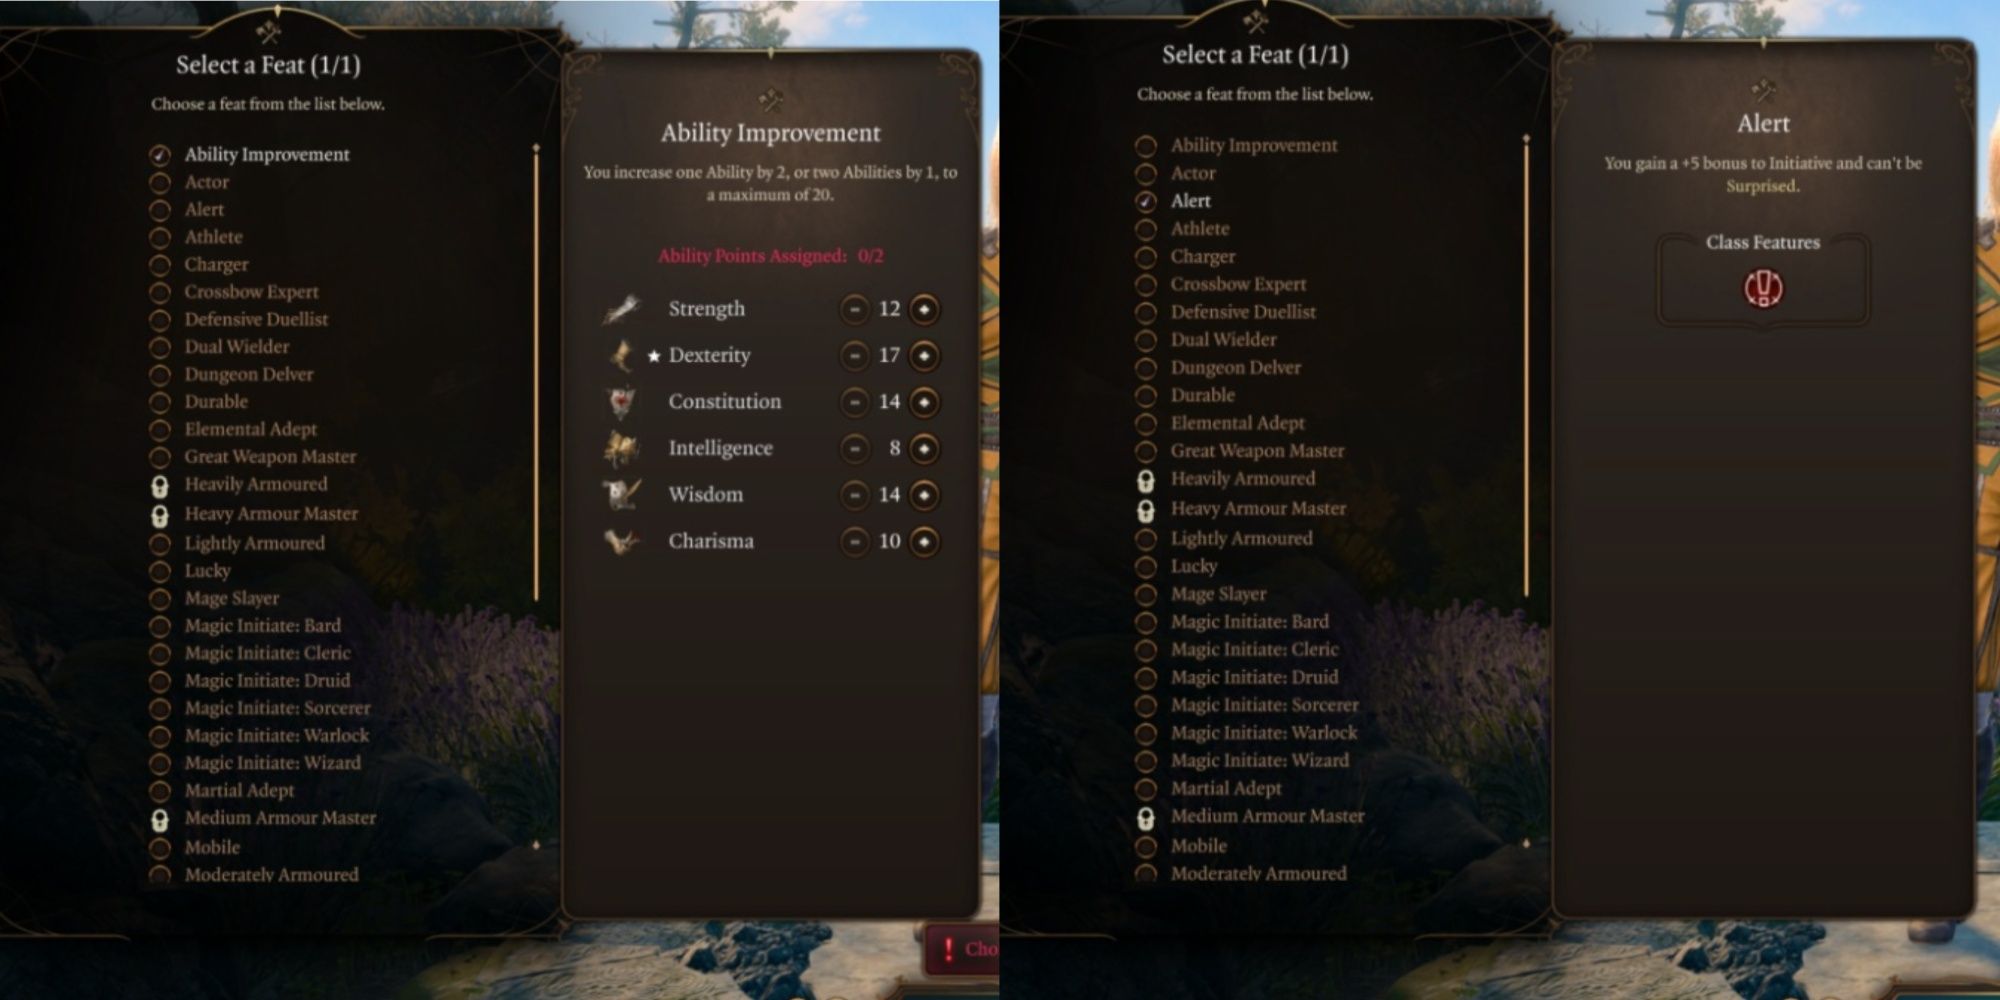 Baldur's Gate 3 feat menu showing different feats